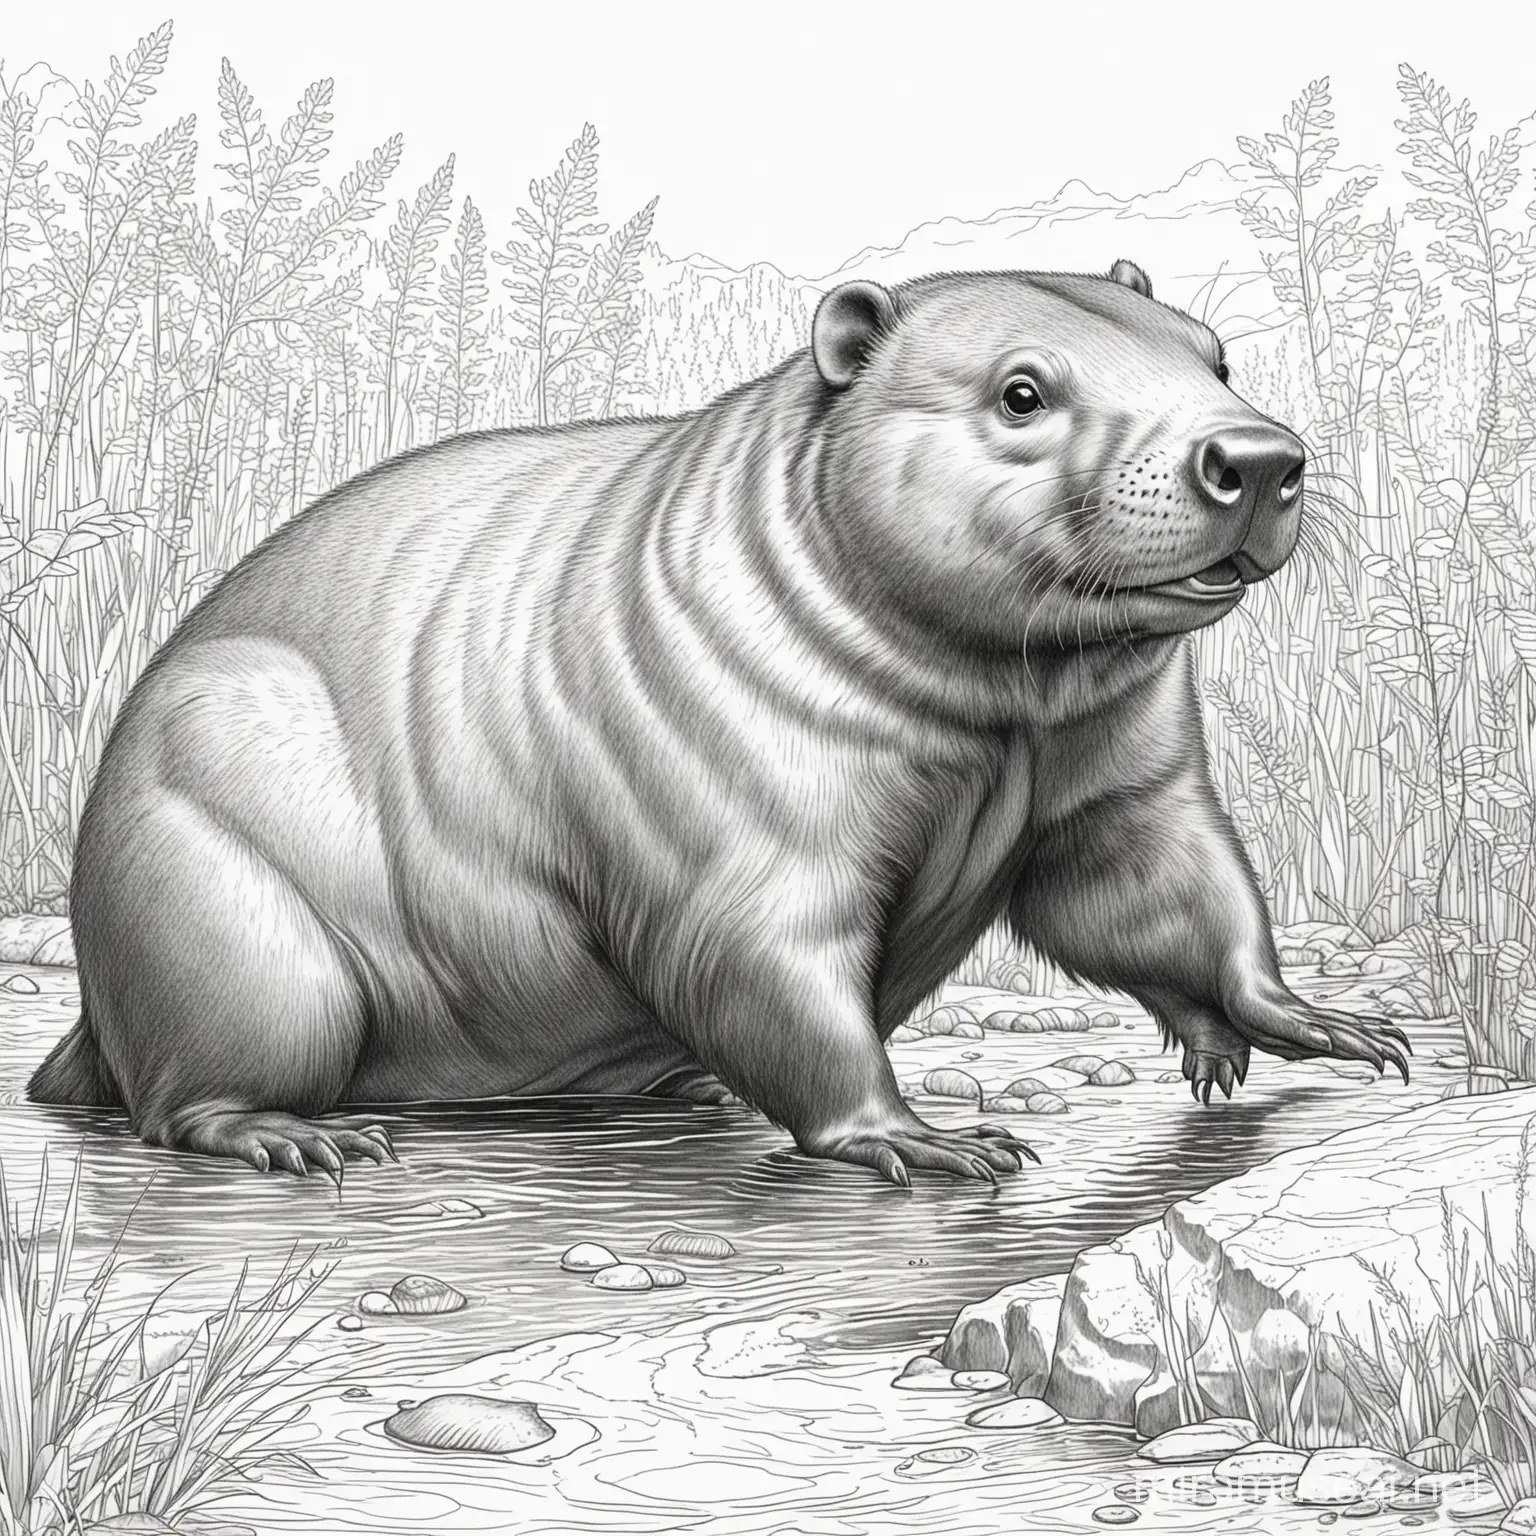 Vibrant Illustration of a Majestic Giant Beaver